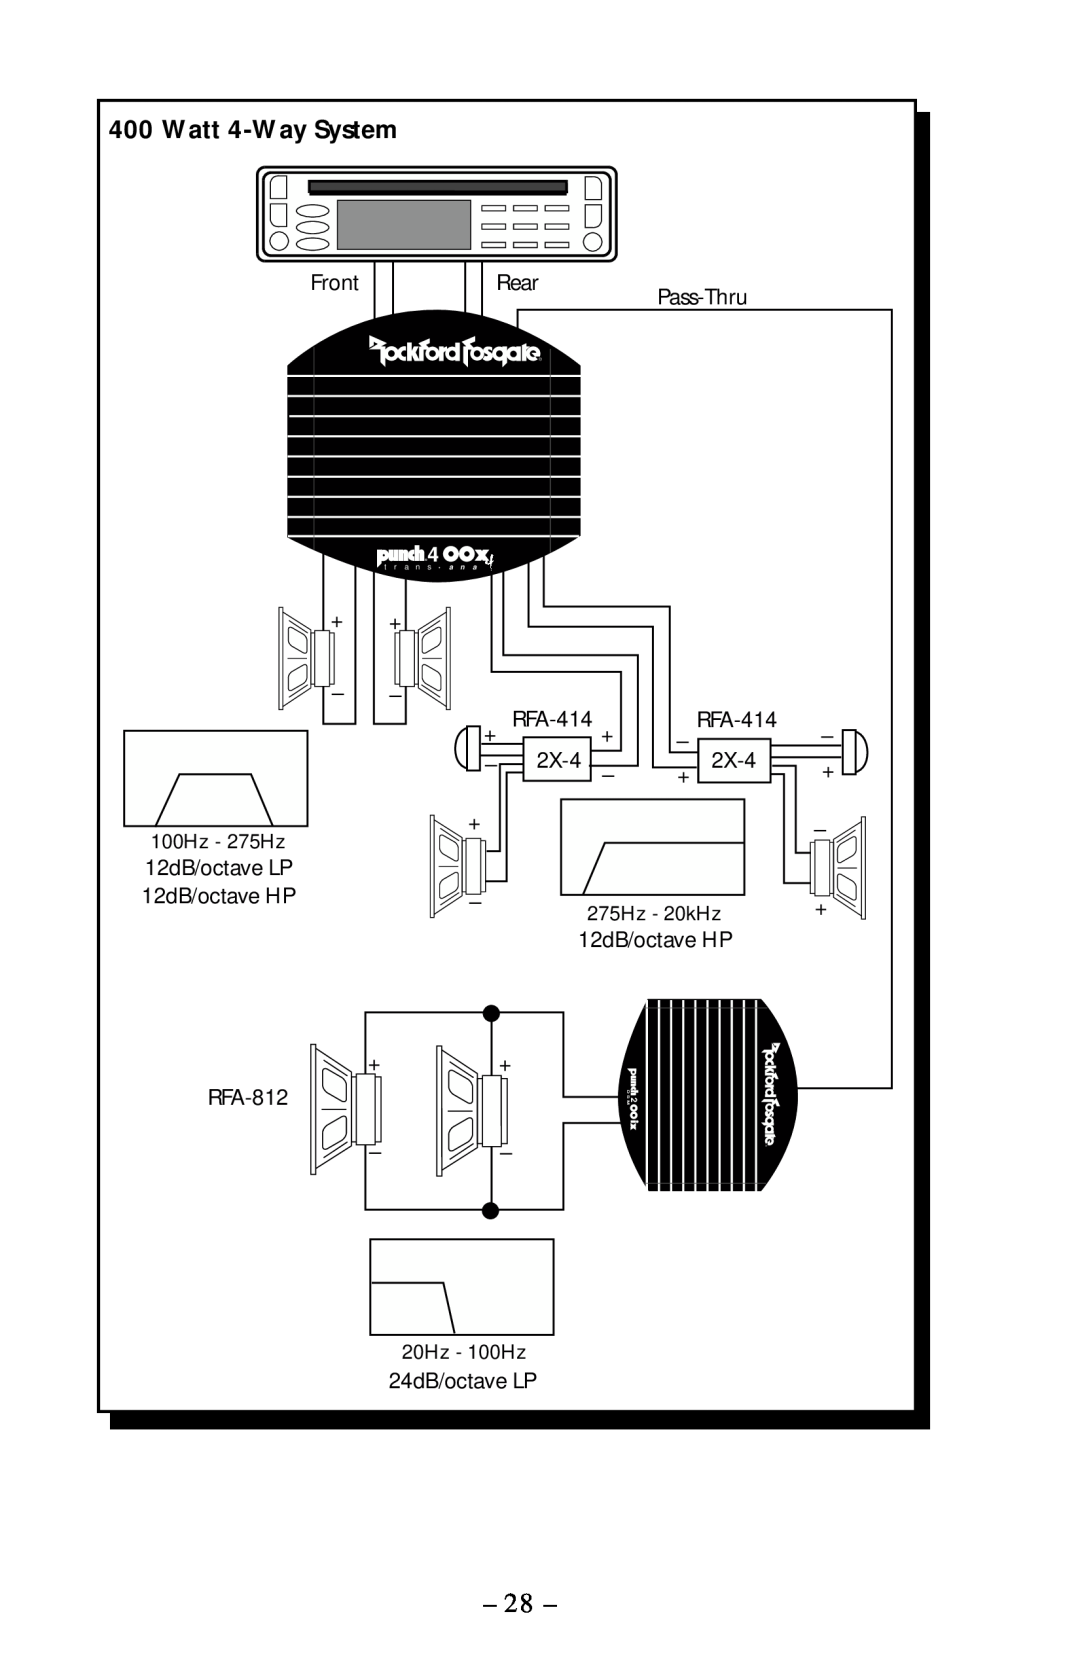 Rockford Fosgate 400x4 operation manual Watt 4-WaySystem 